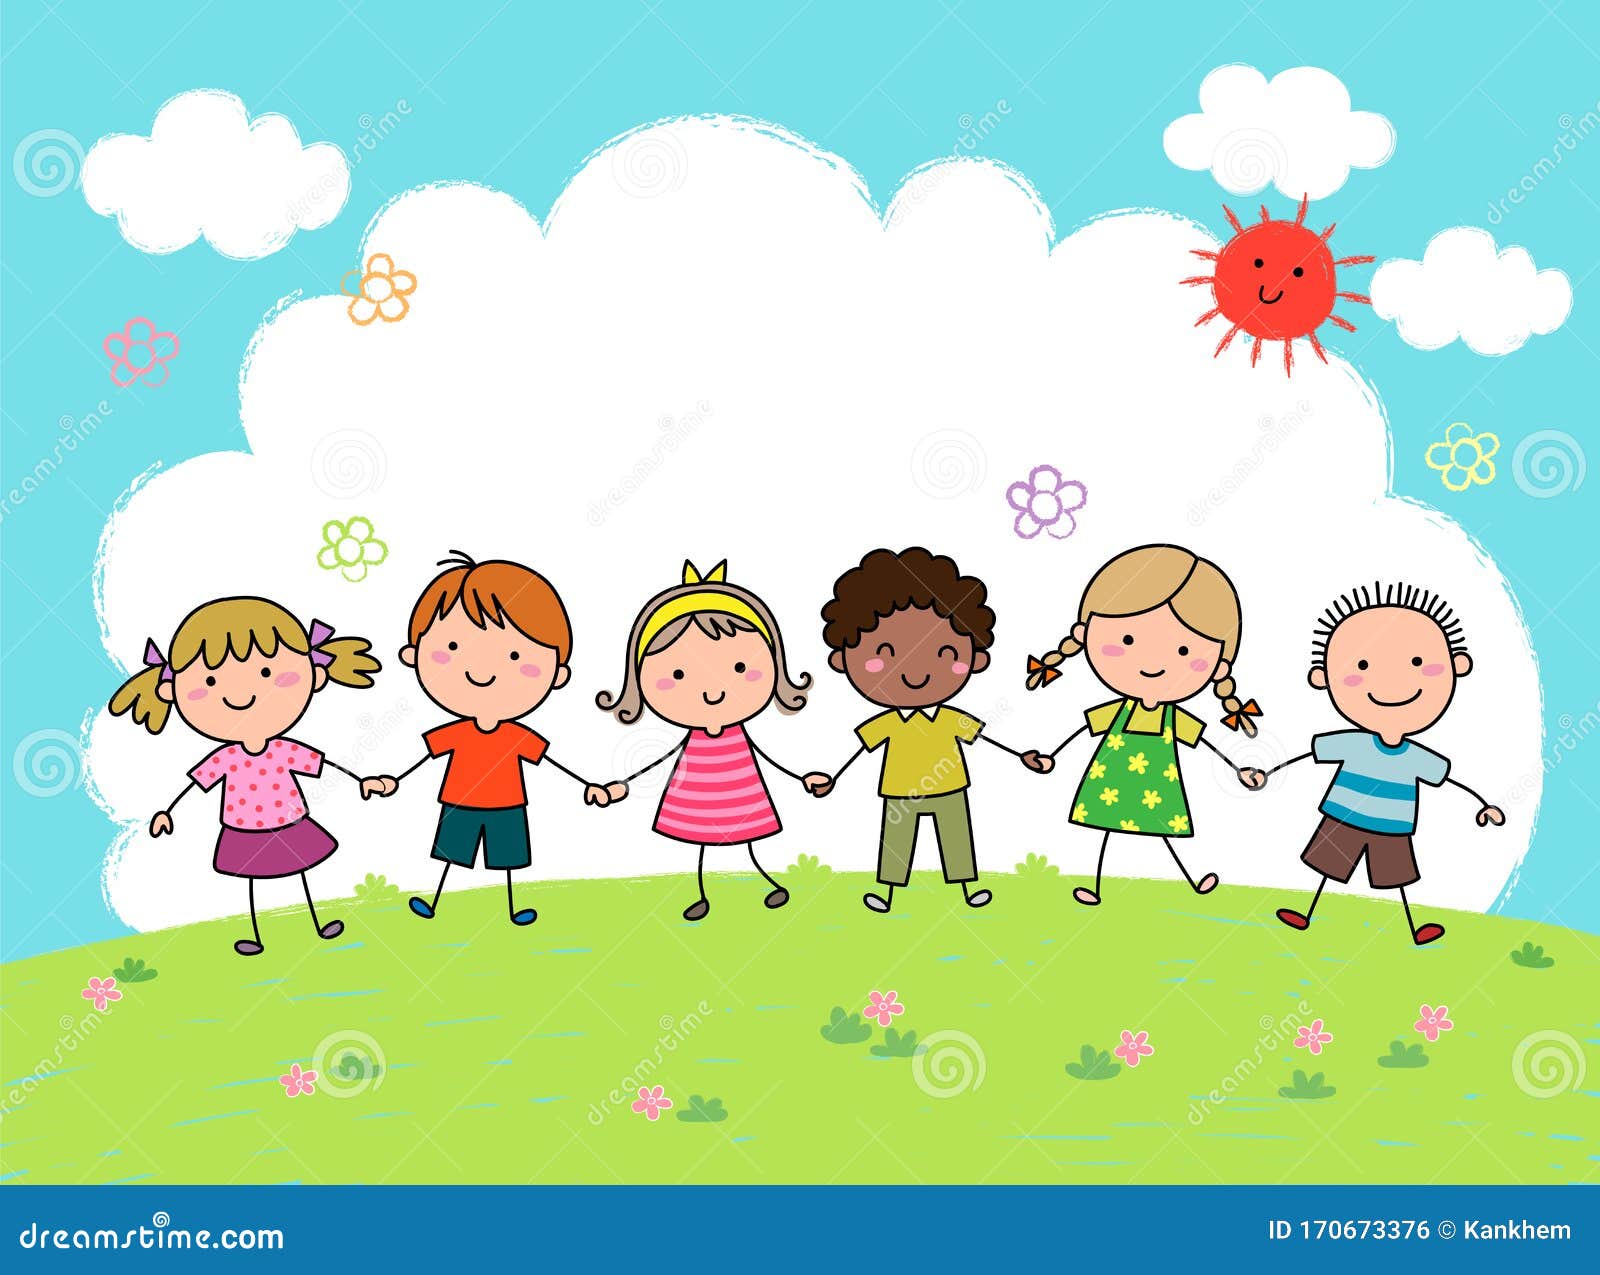 Group Of Children Putting Hands Together Vector Image Cartoon Kids Images